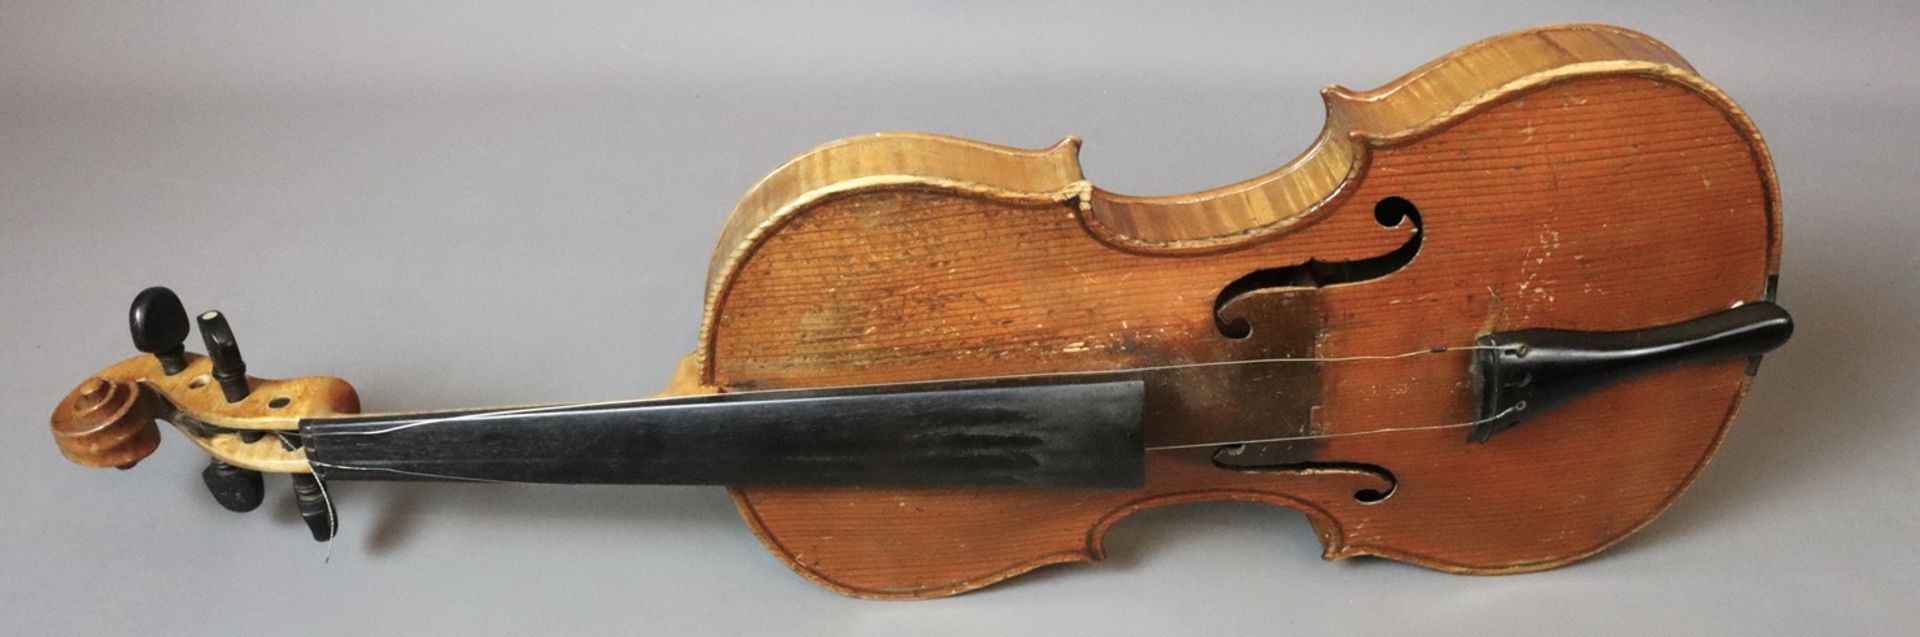 Jacobus Stainer violin, late 19th century, Austria